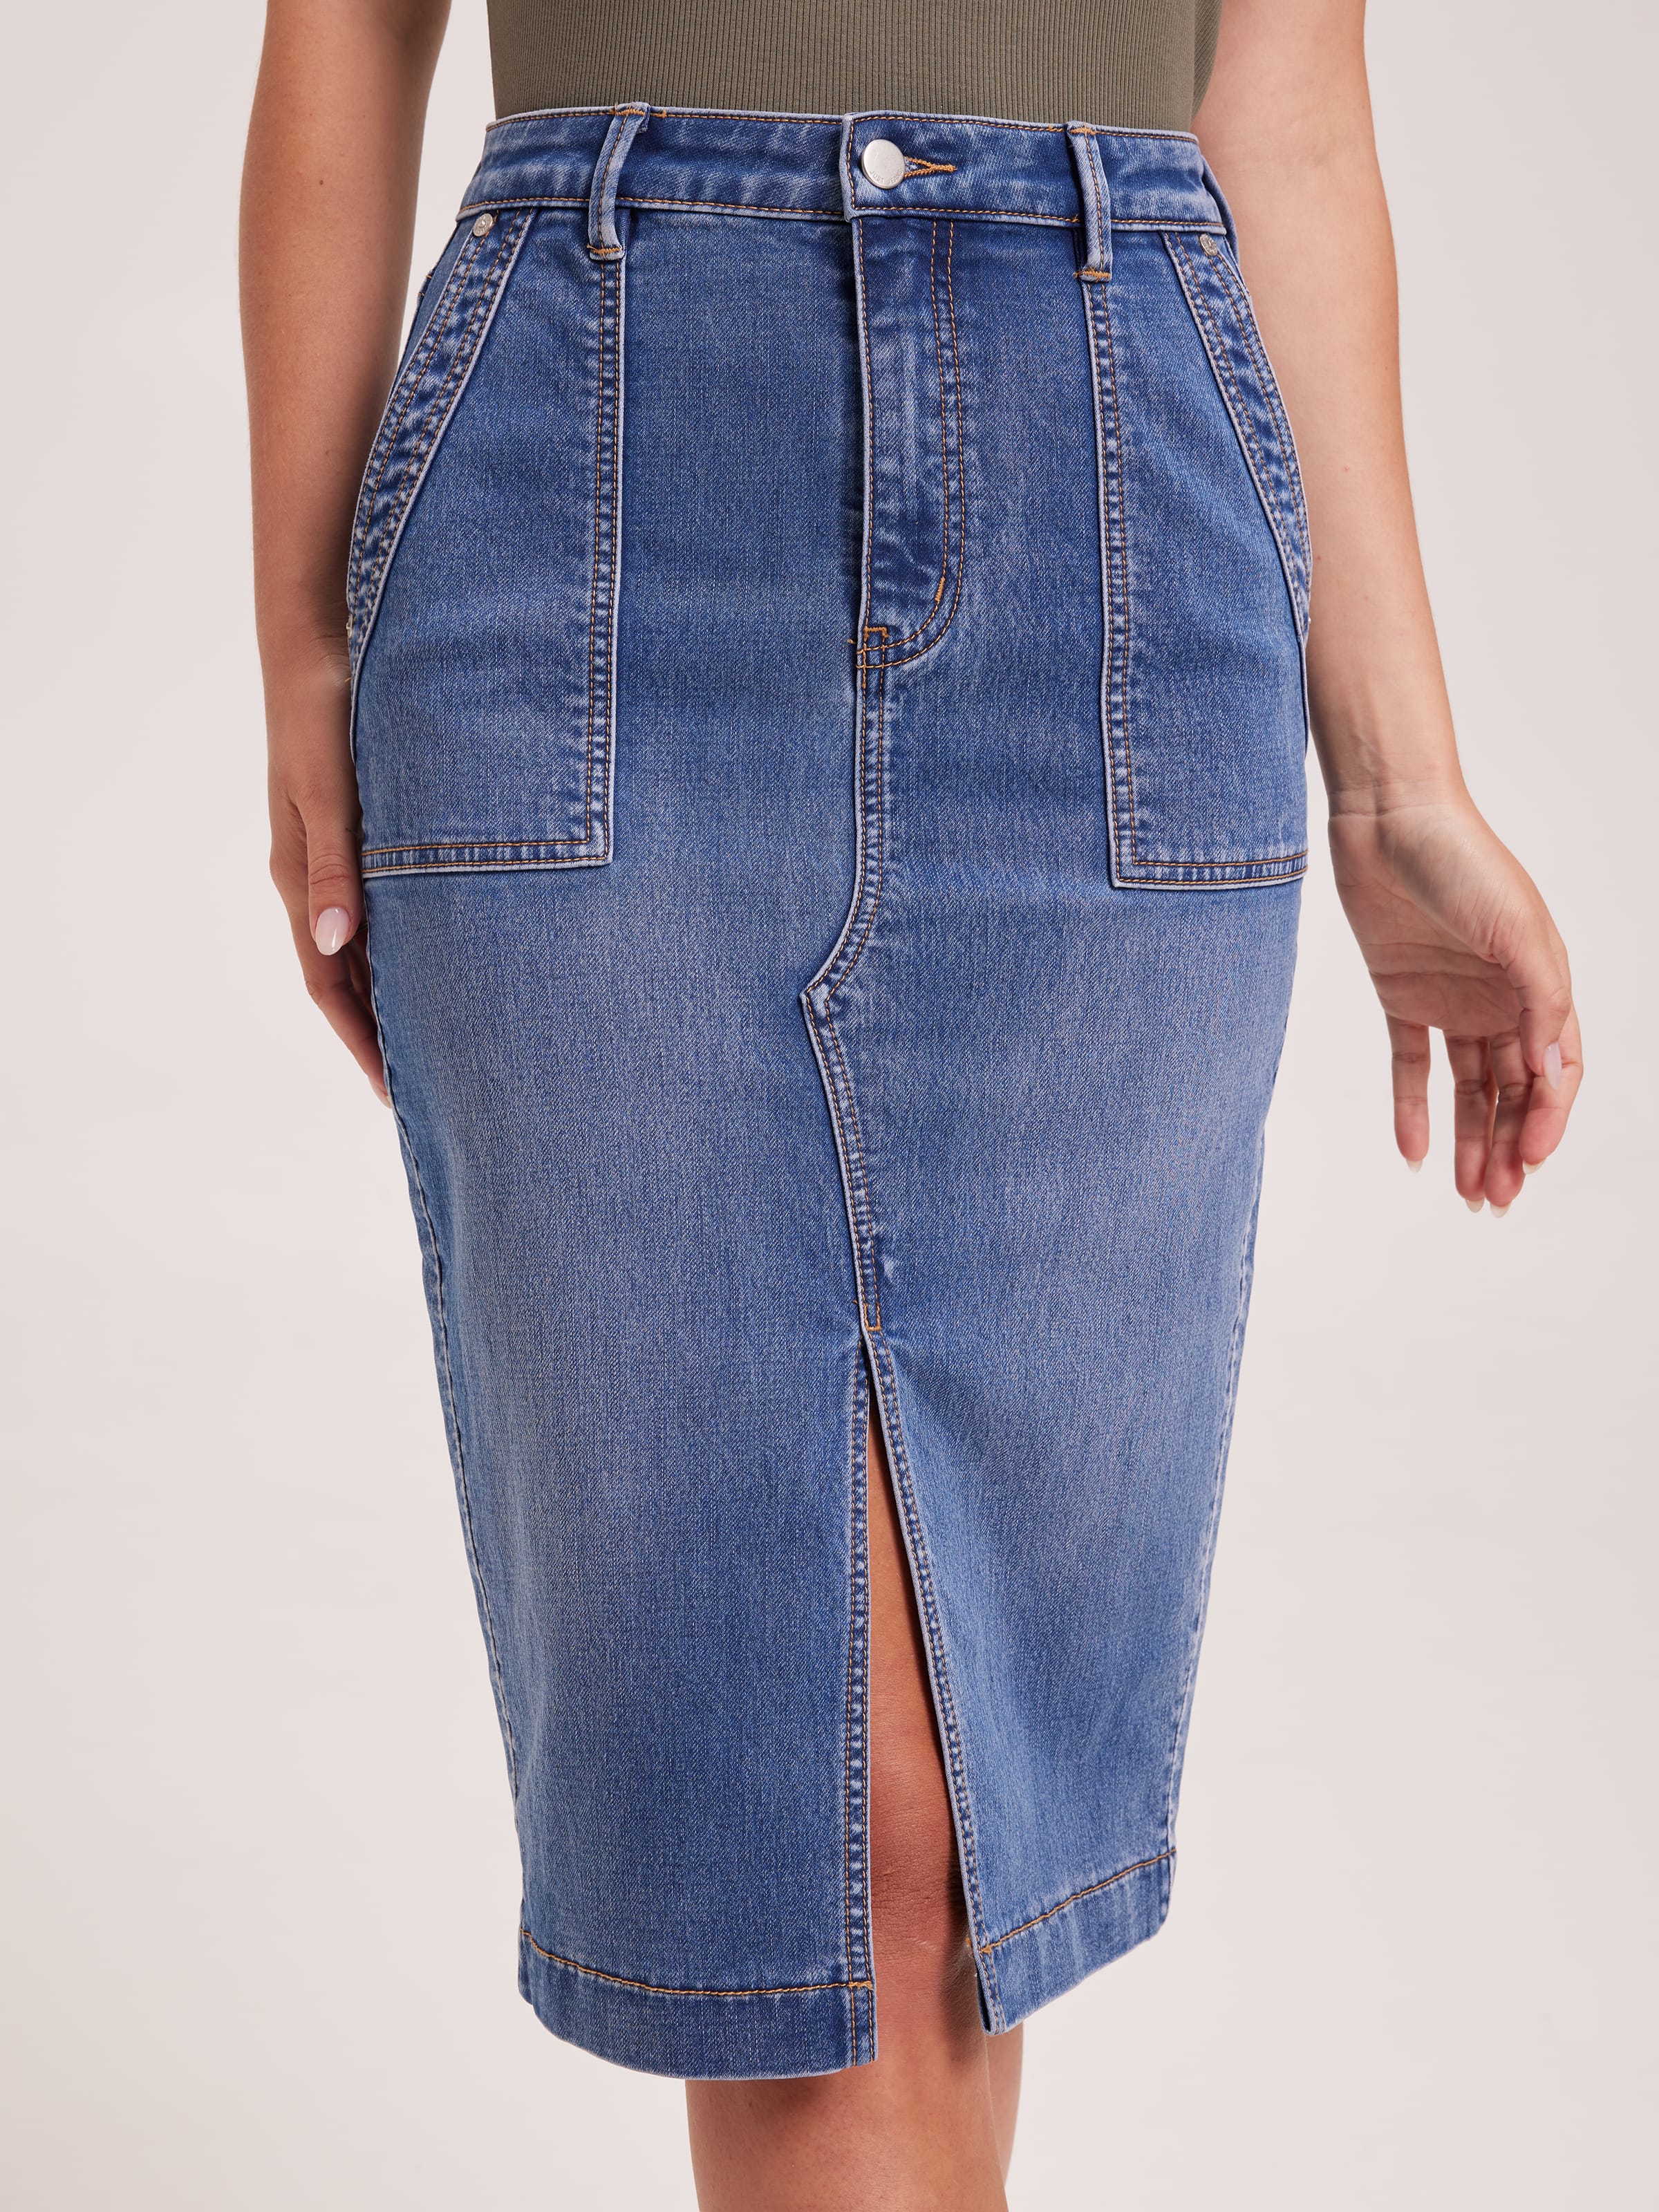 Amaze Utility Midi Skirt - Just Jeans Online